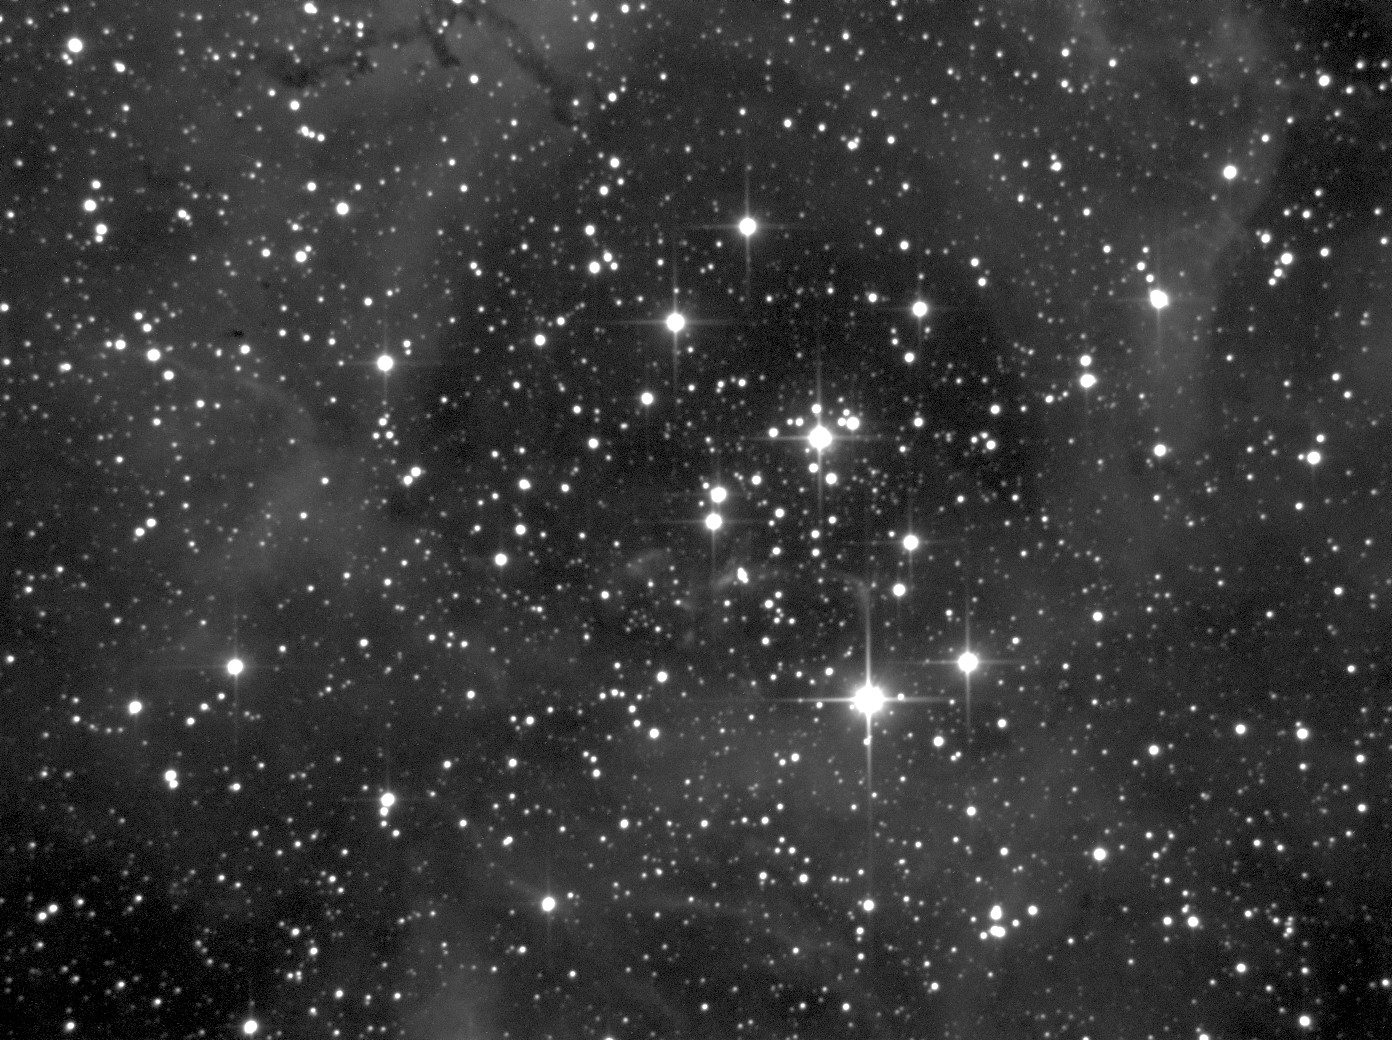 Rosette nebula NGC2238_3x360s_2_CLS_guiding.jpg